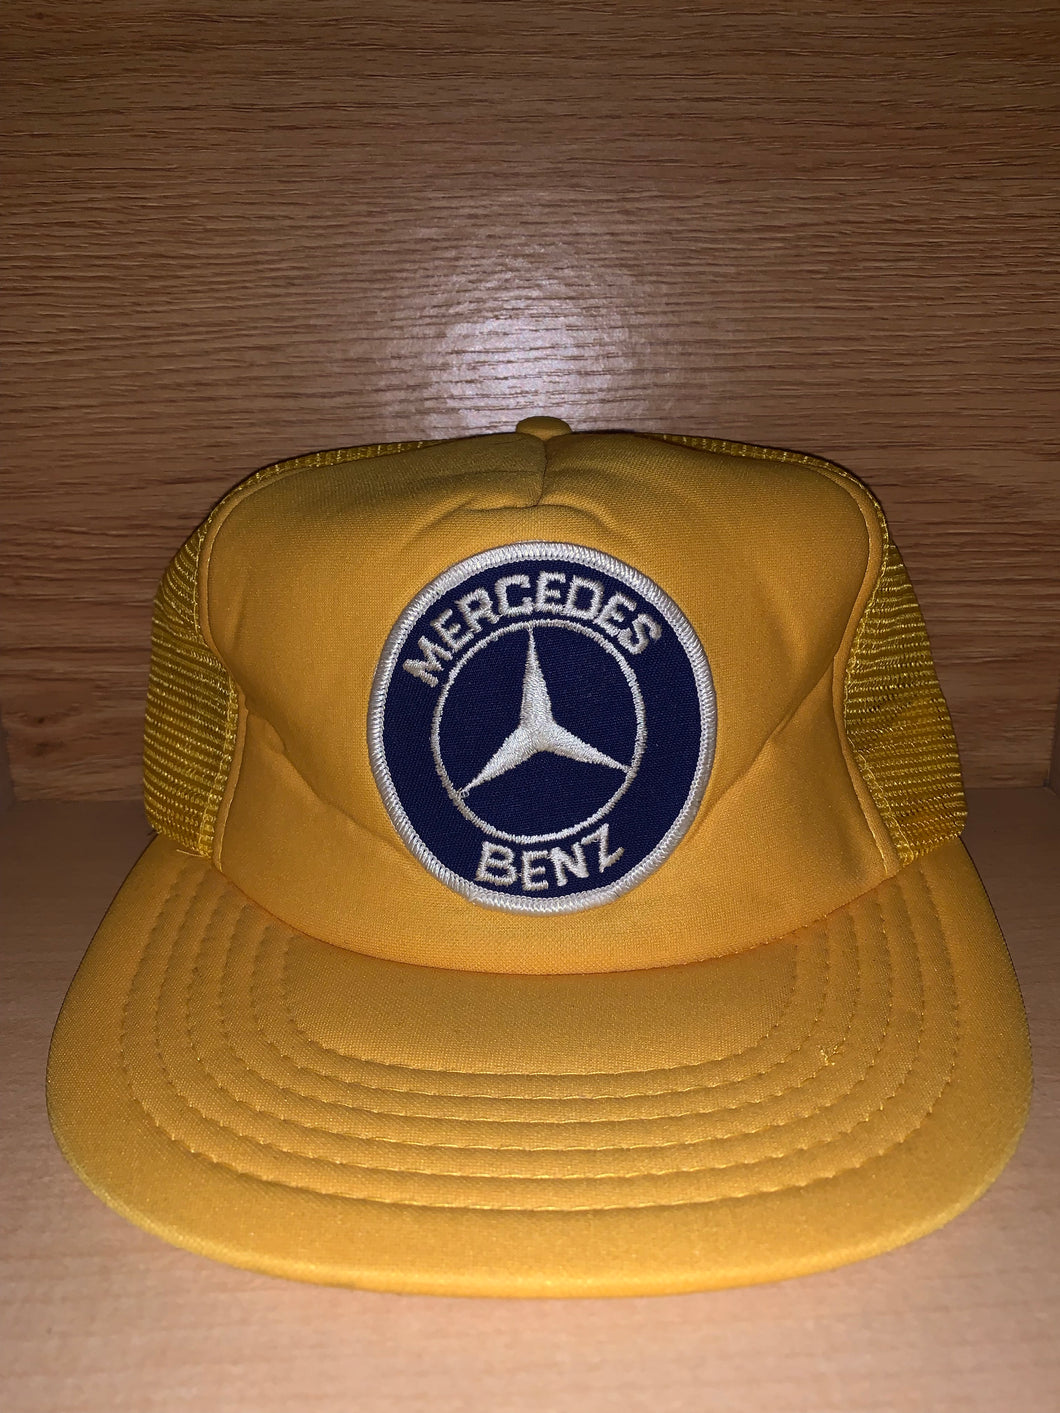 Vintage Mercedes Benz Hat